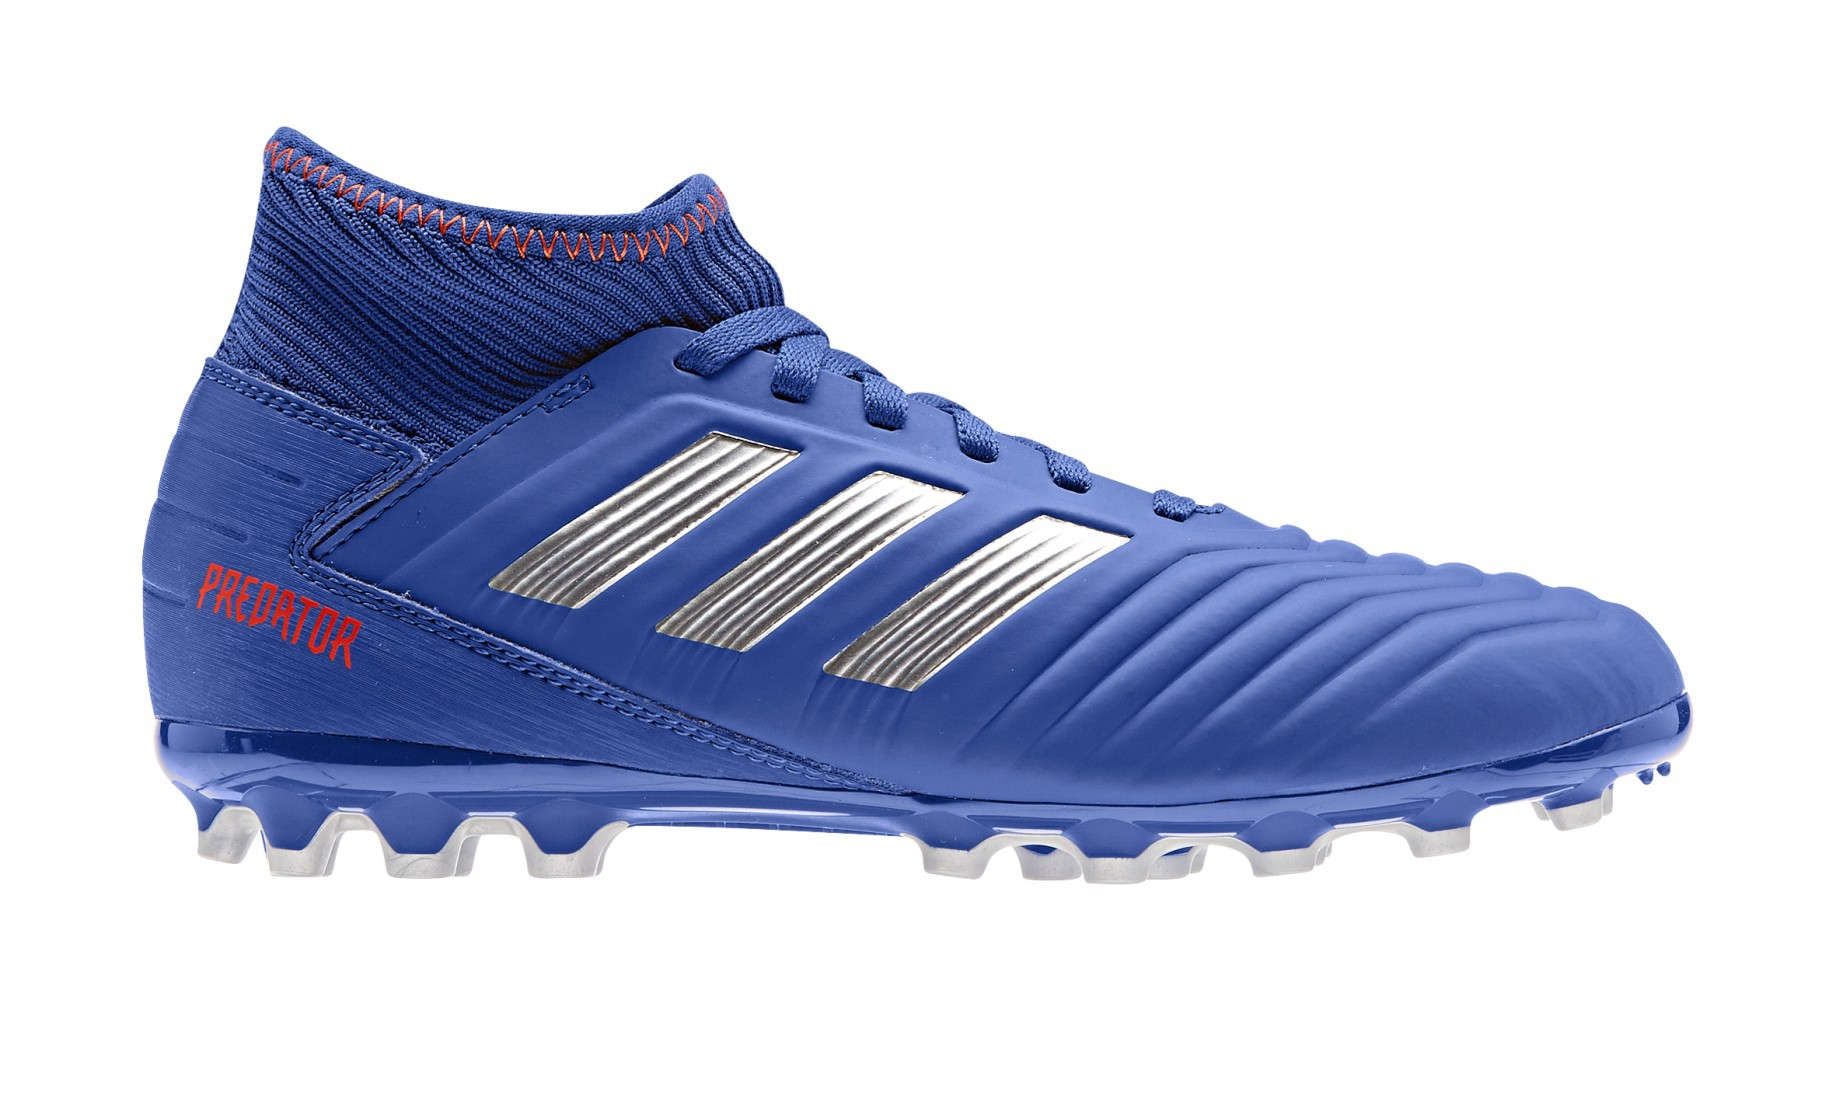 Fútbol zapatos de Adidas Predator 19.3 AG Presentan colore azul amarillo - Adidas - SportIT.com